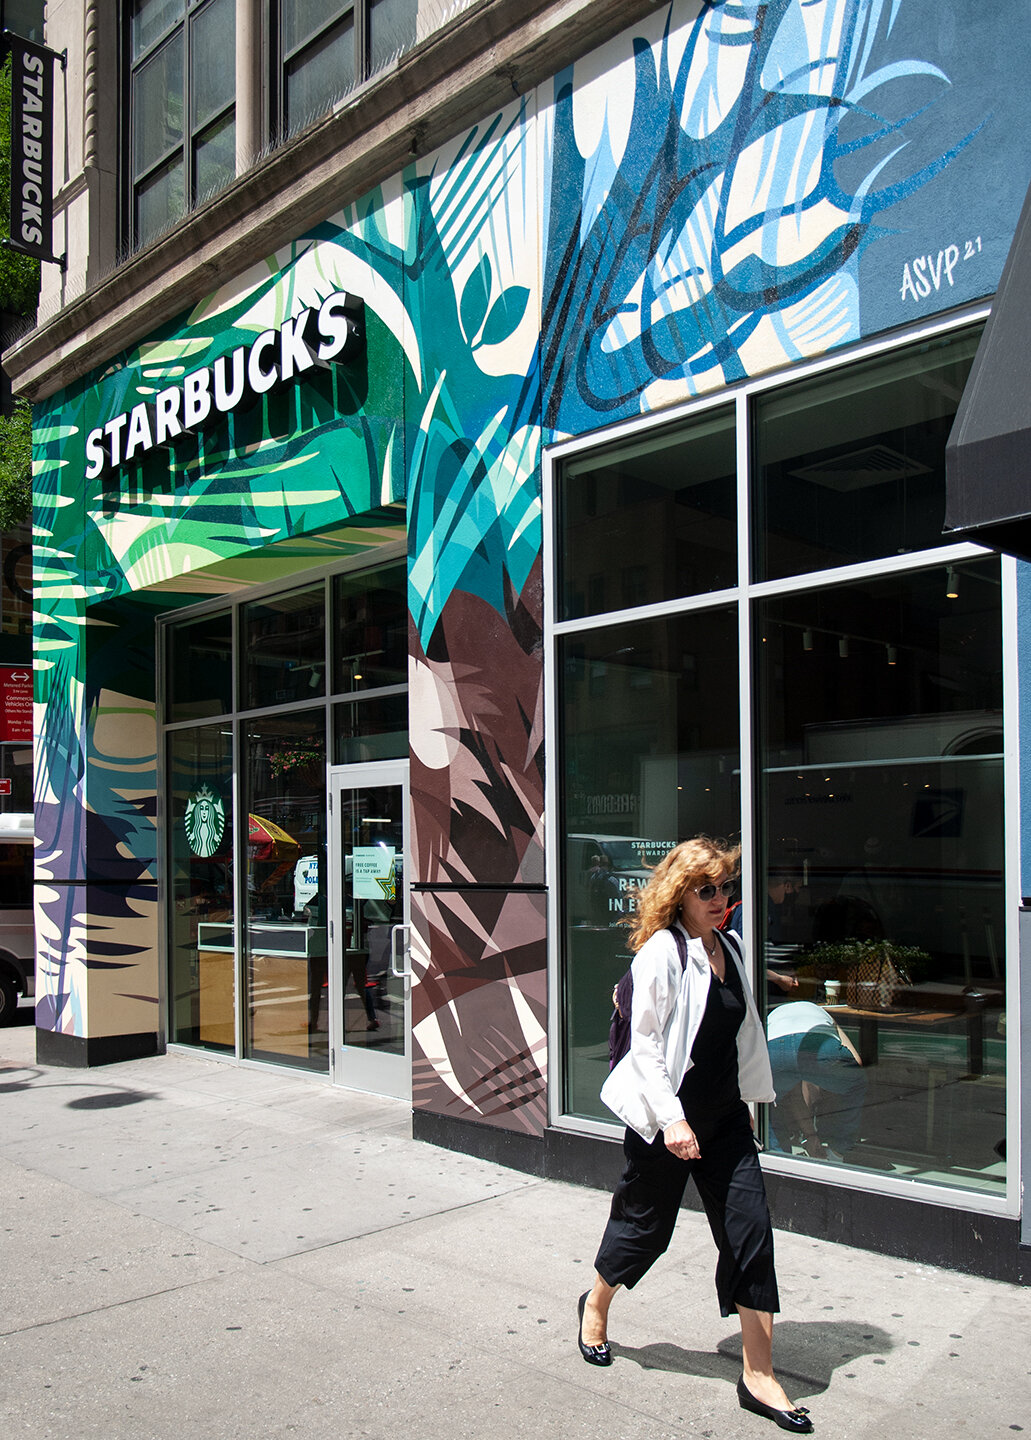 875 6th Avenue / Starbucks / Lee & Associates